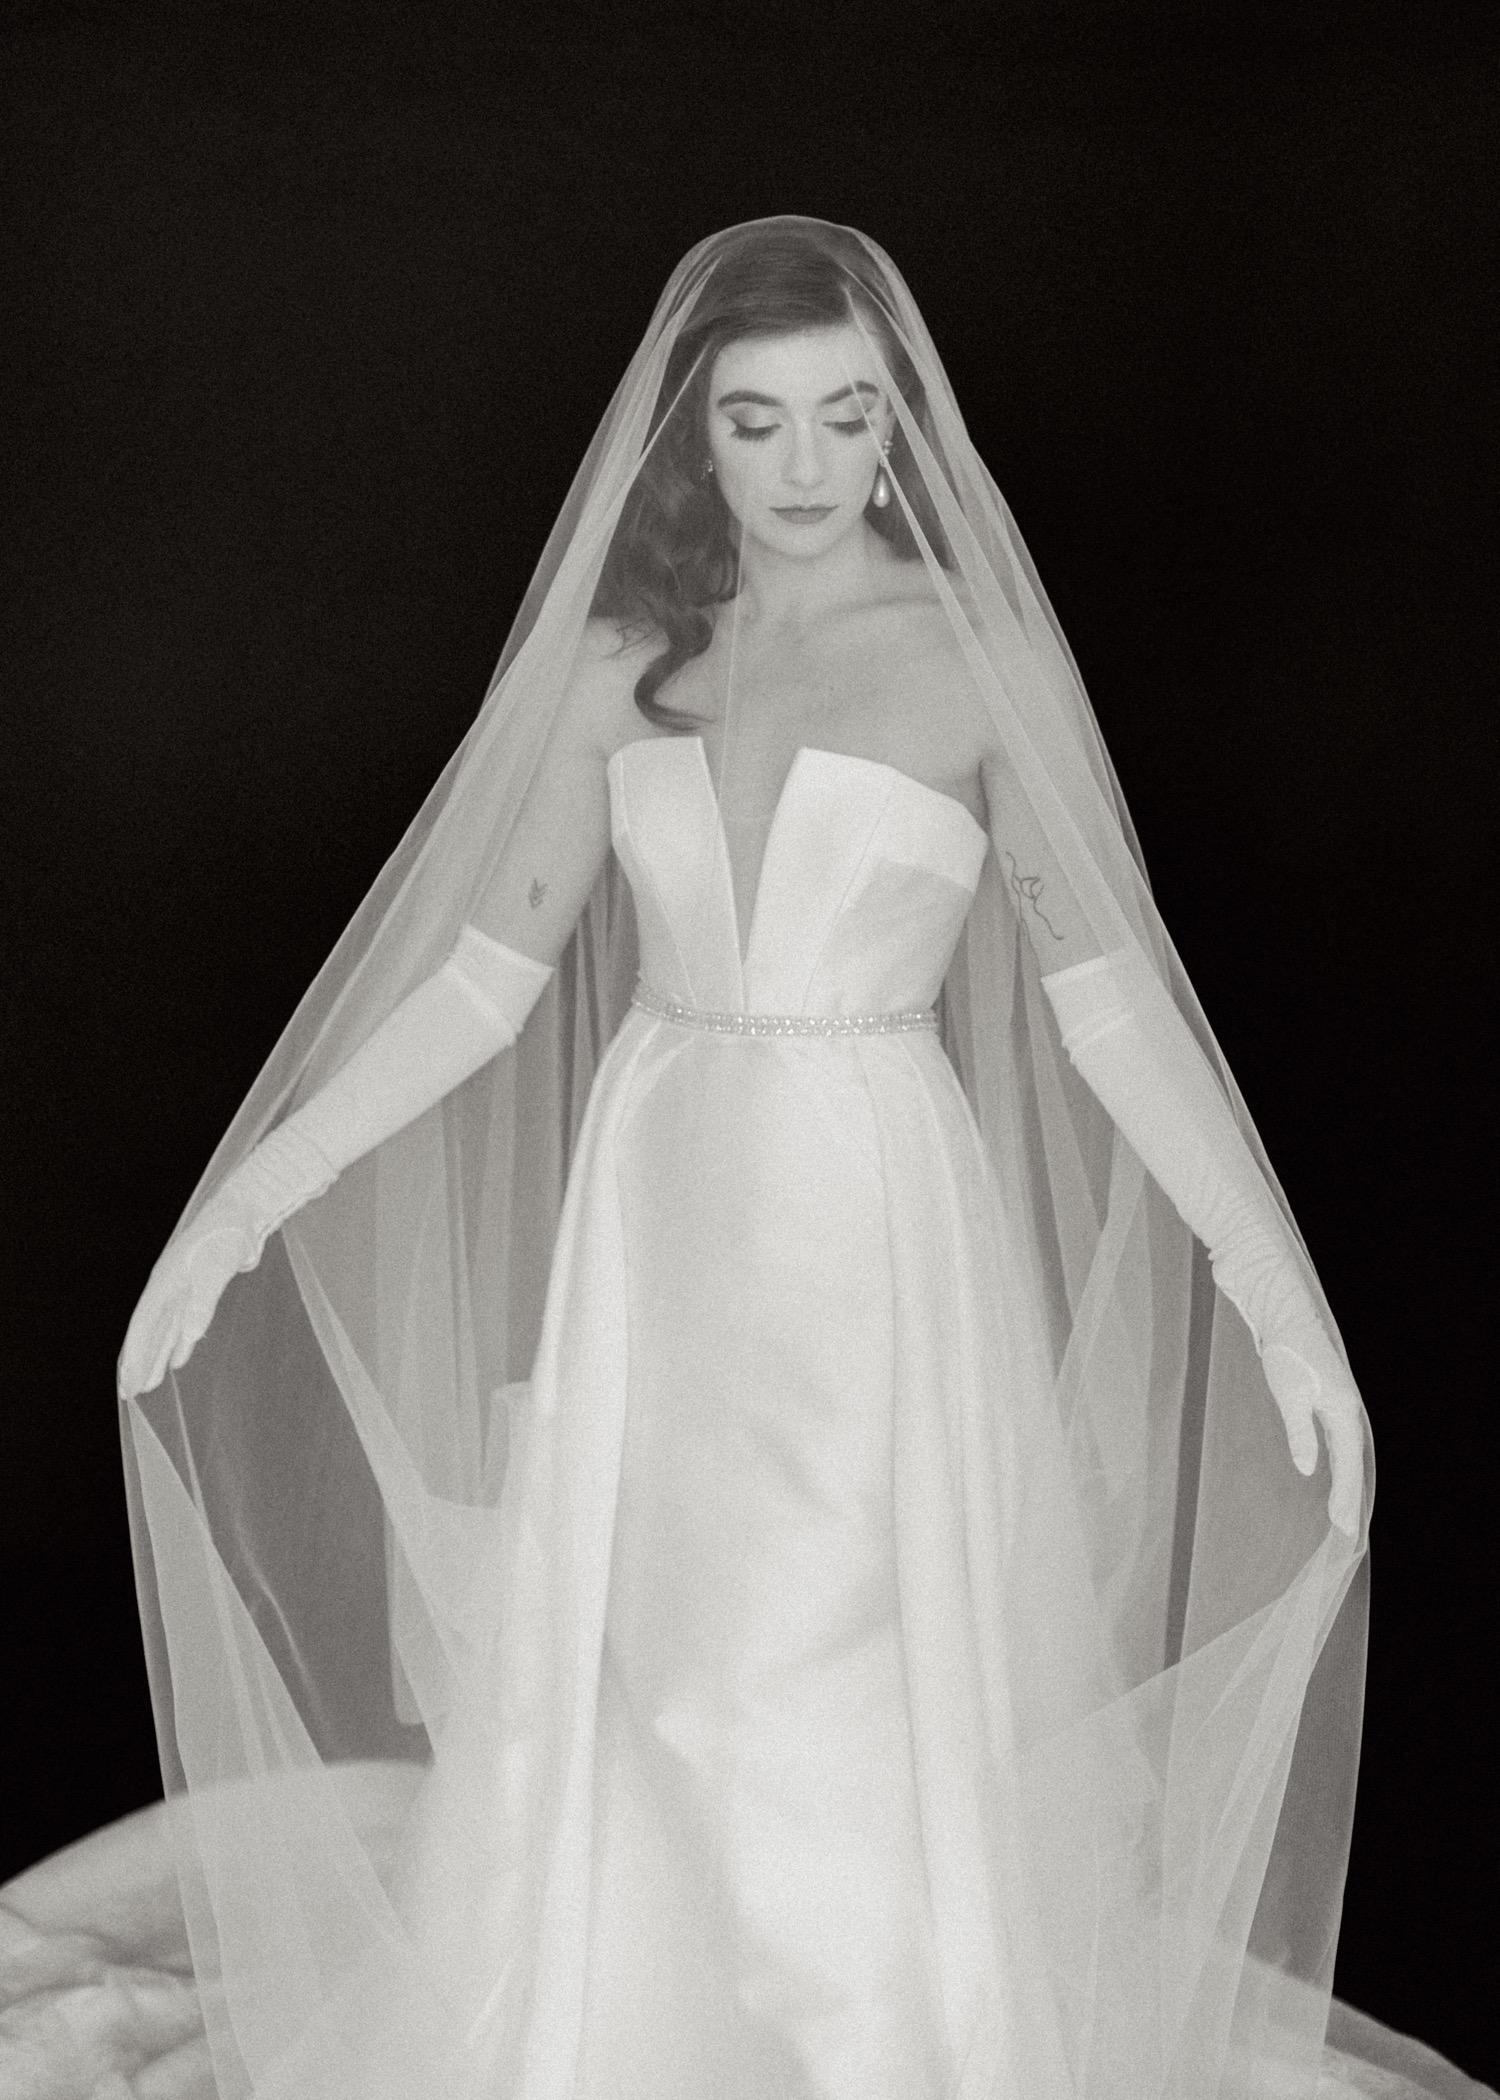 https://fetch.getnarrativeapp.com/static/cbb3543c-76b2-4397-ba8b-8abac010d767/Bride-in-white-sleeveless-wedding-dress,-overskirt,-gloves,-and-long-veil-during-studio-bridal-session-with-black-backdrop.jpg?w=1500